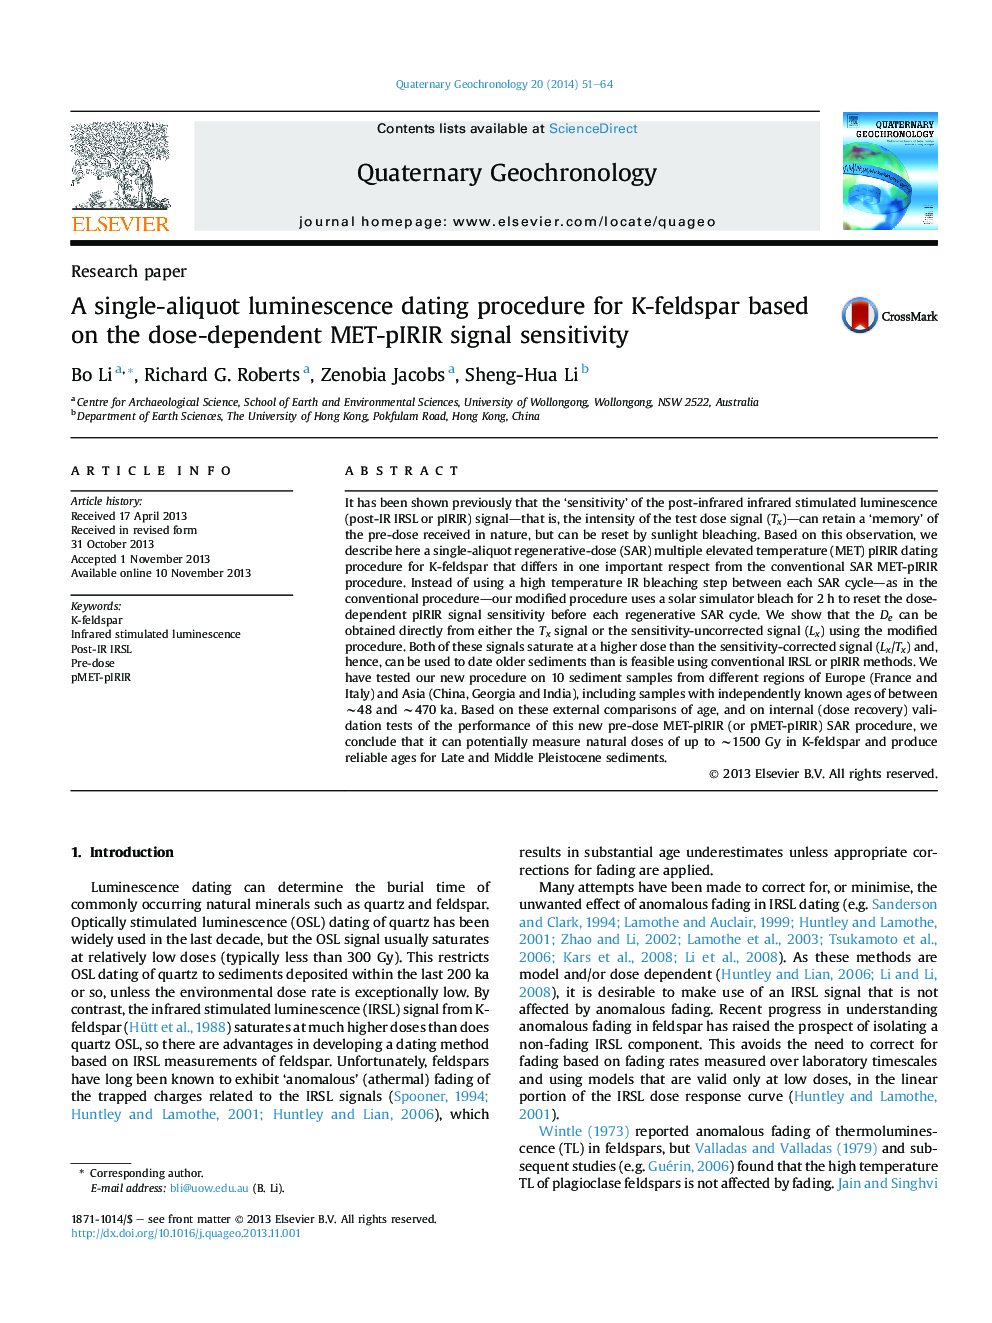 A single-aliquot luminescence dating procedure for K-feldspar based on the dose-dependent MET-pIRIR signal sensitivity